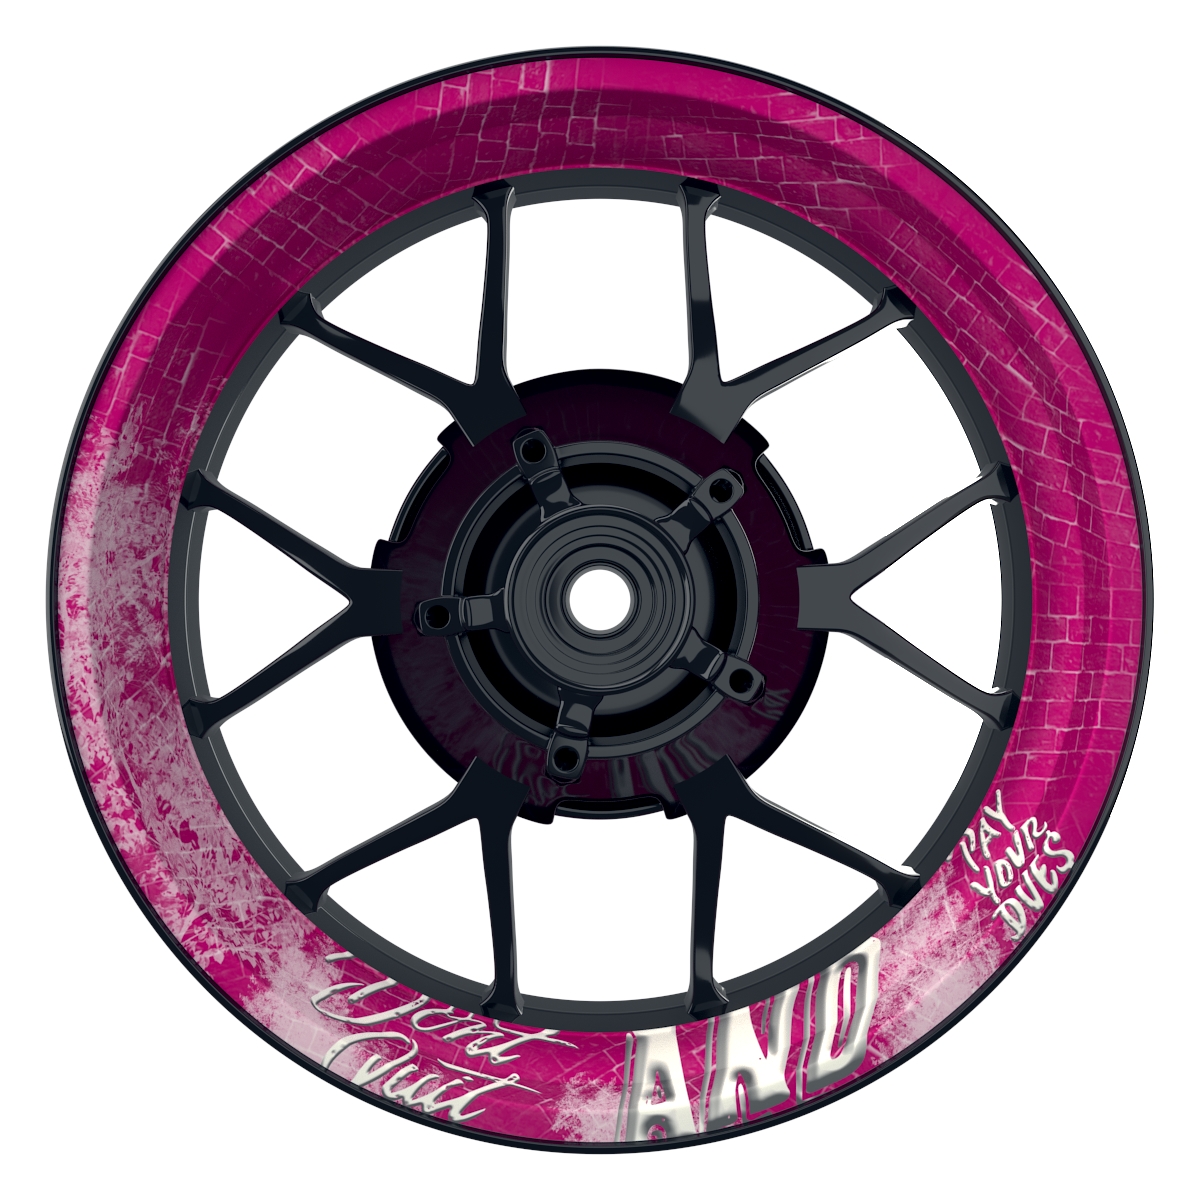 Dontquit pink Wheelsticker Felgenaufkleber